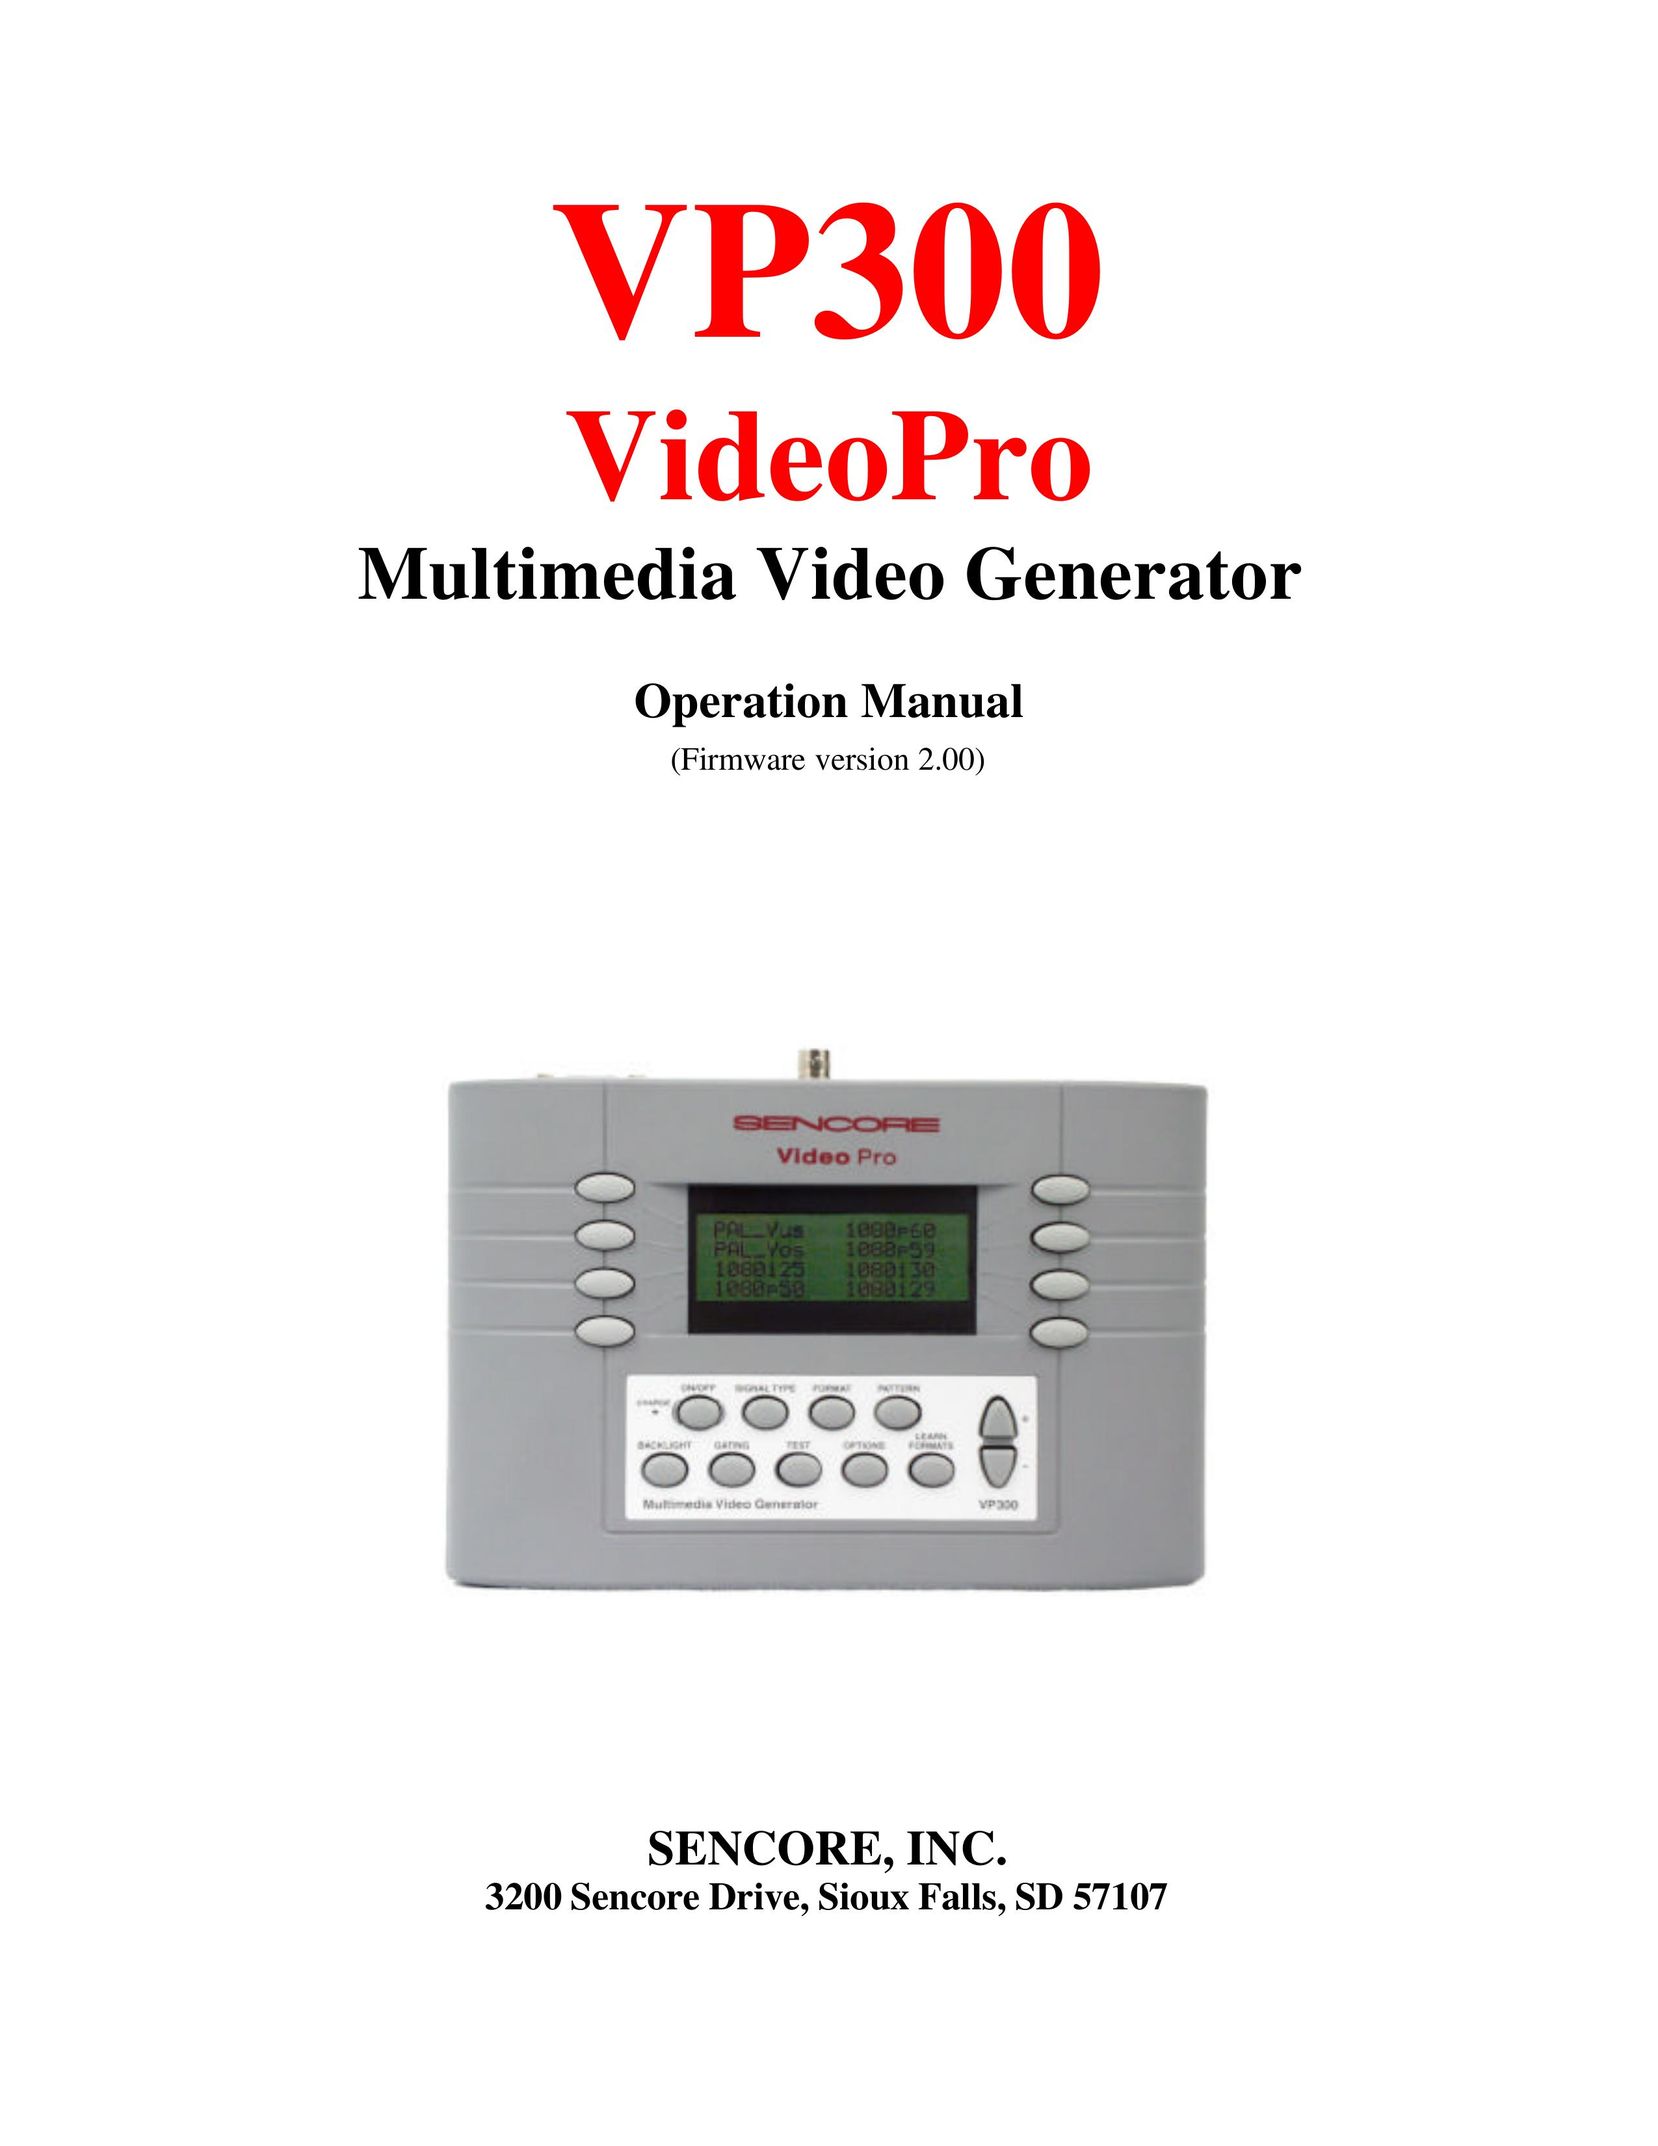 Sencore VP300 Home Theater Server User Manual